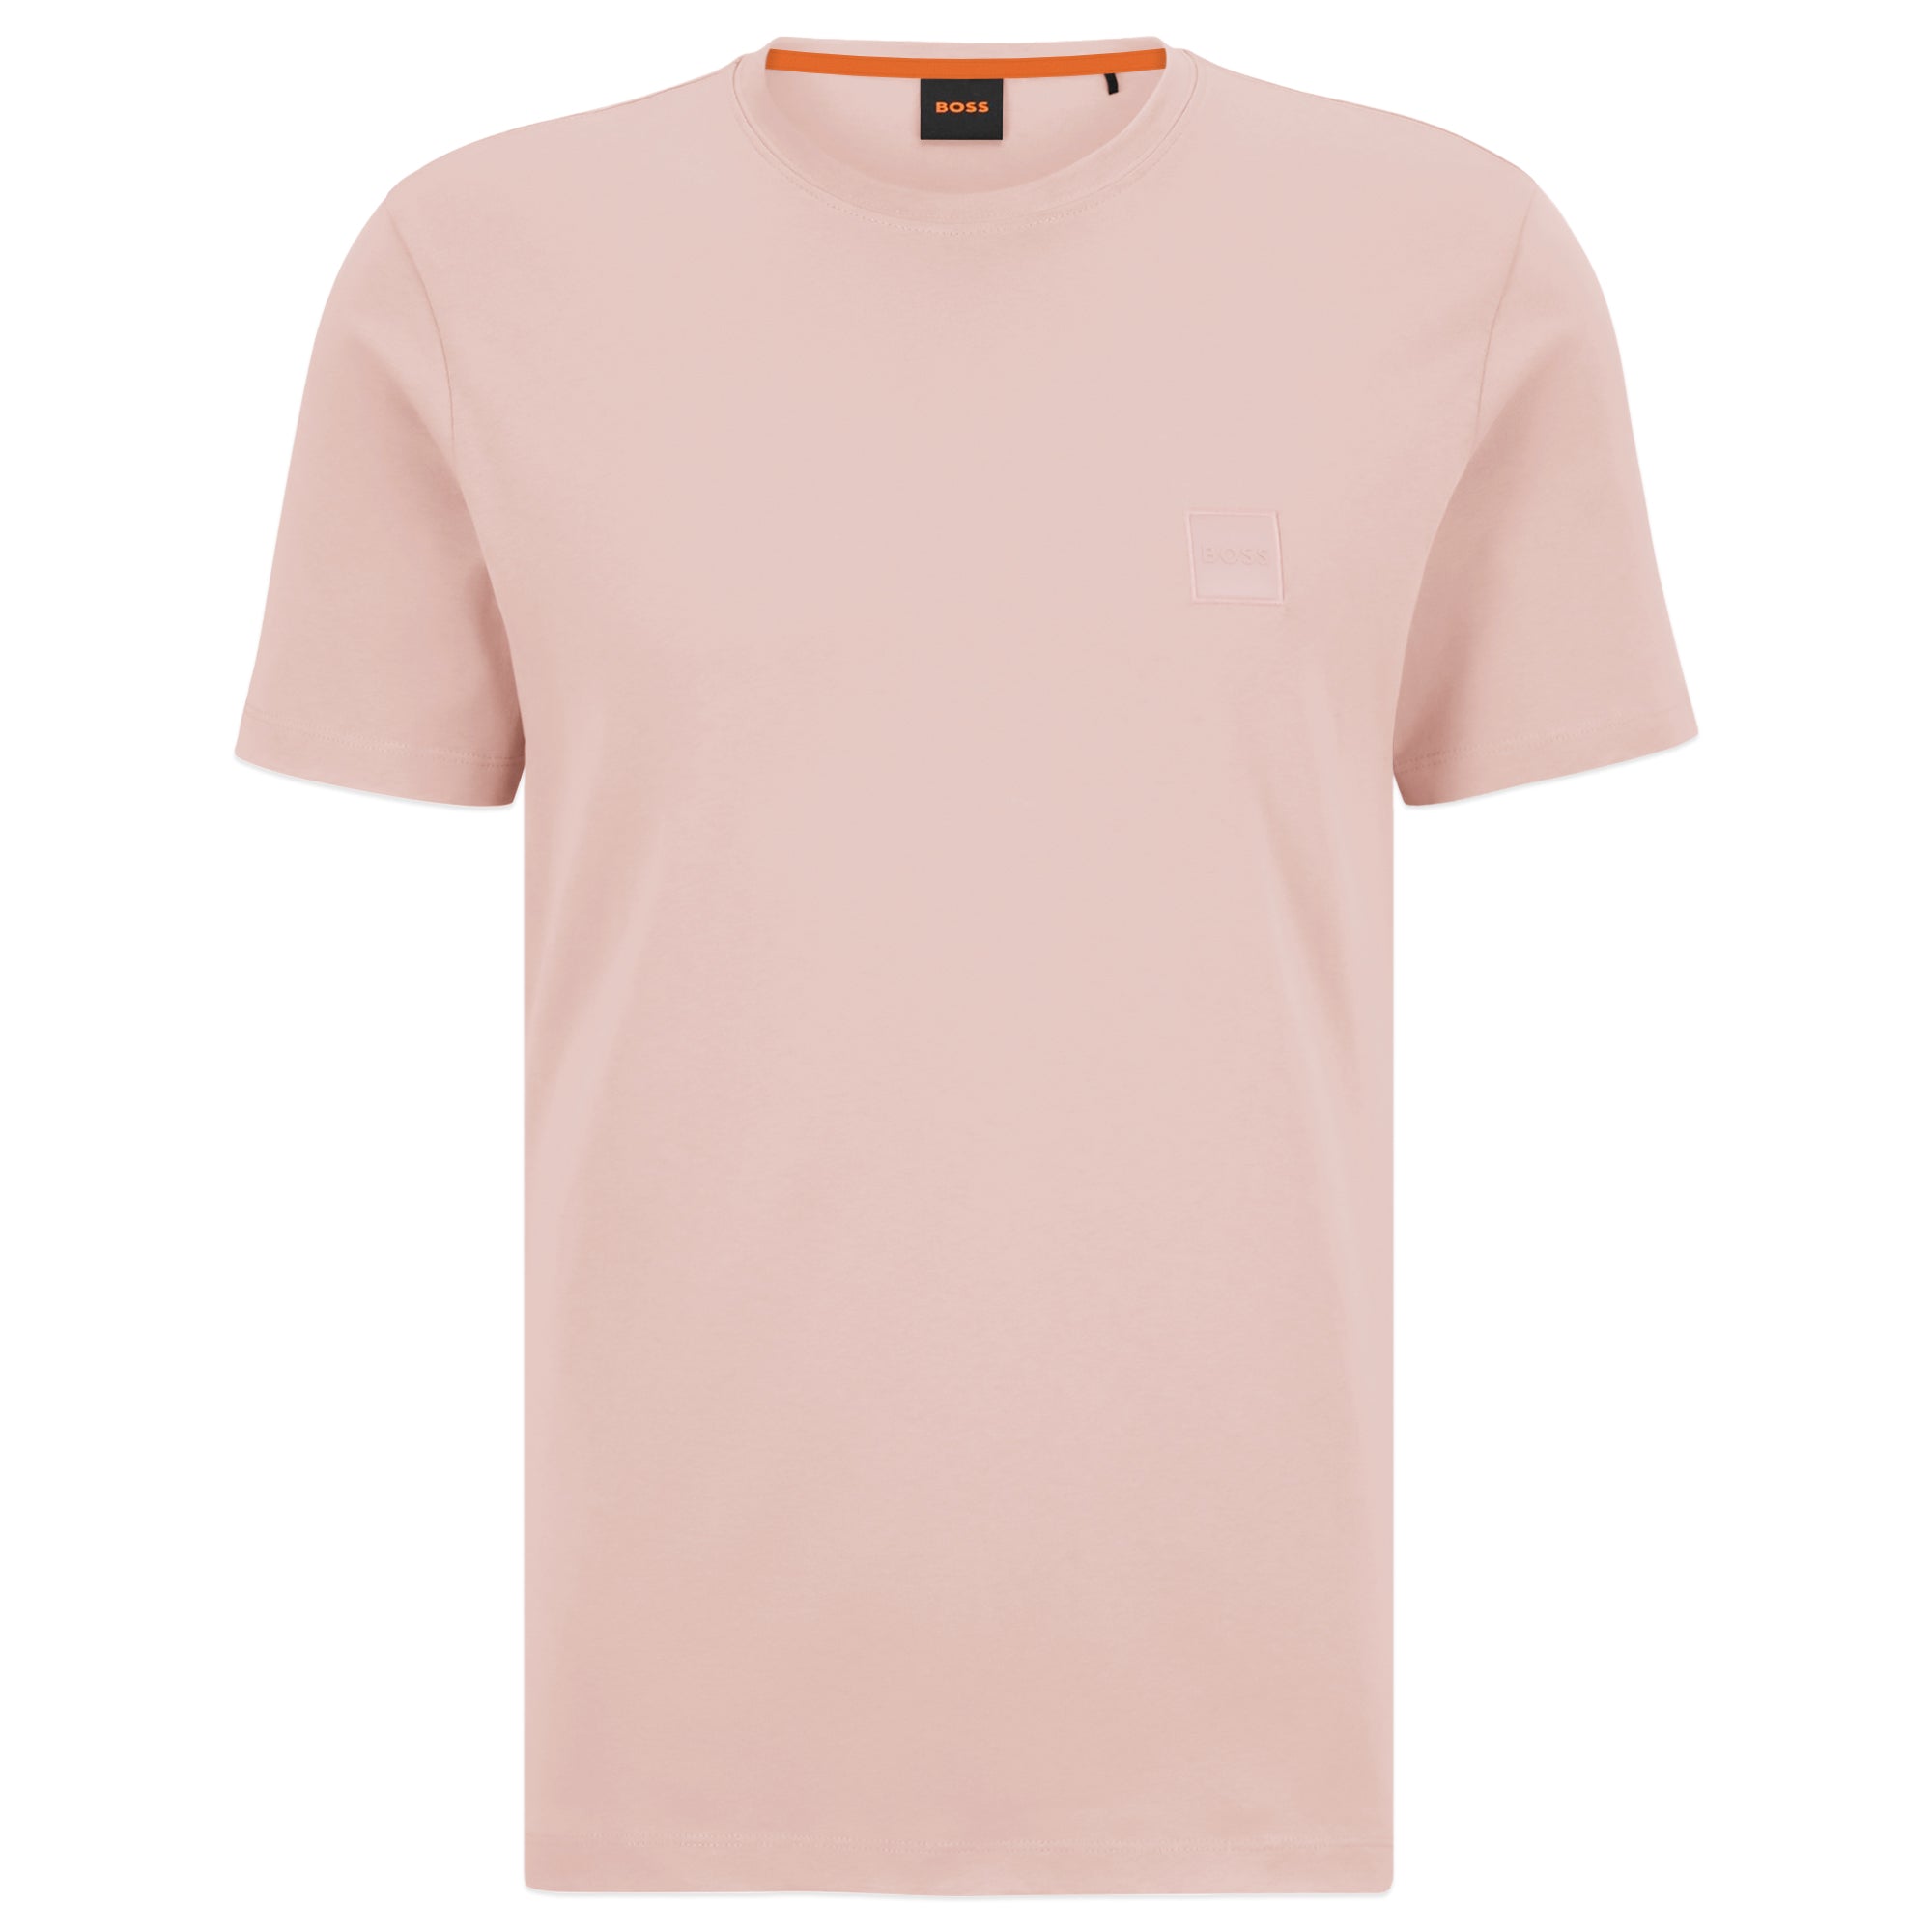 Boss Tales T-Shirt - Candy Pink